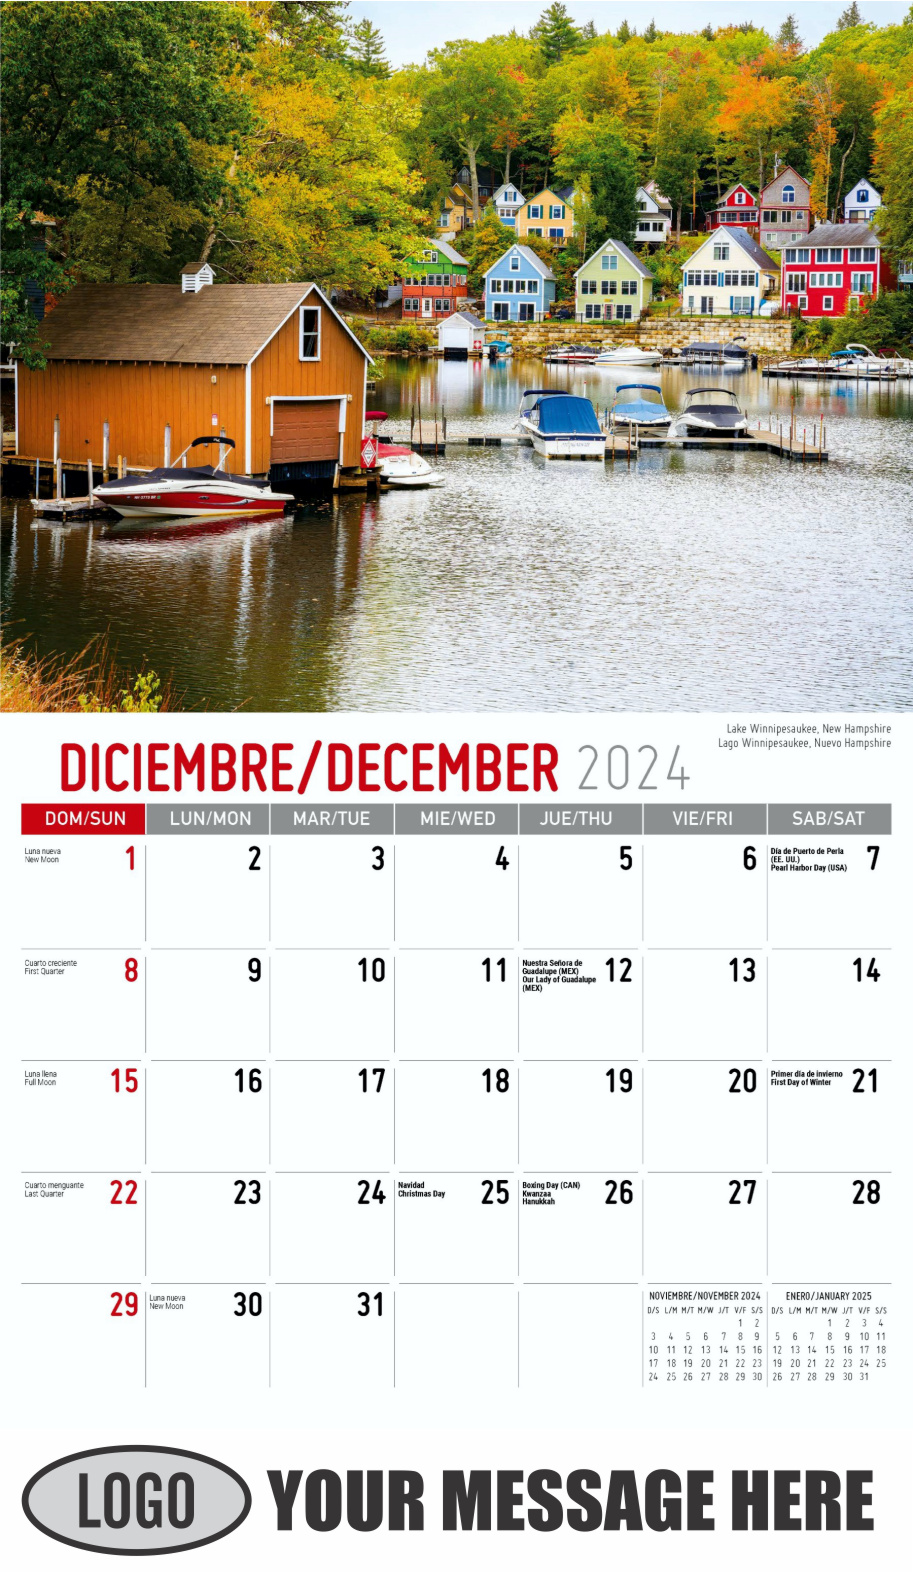 Scenes of America 2024 Bilingual Business Promo Calendar - December